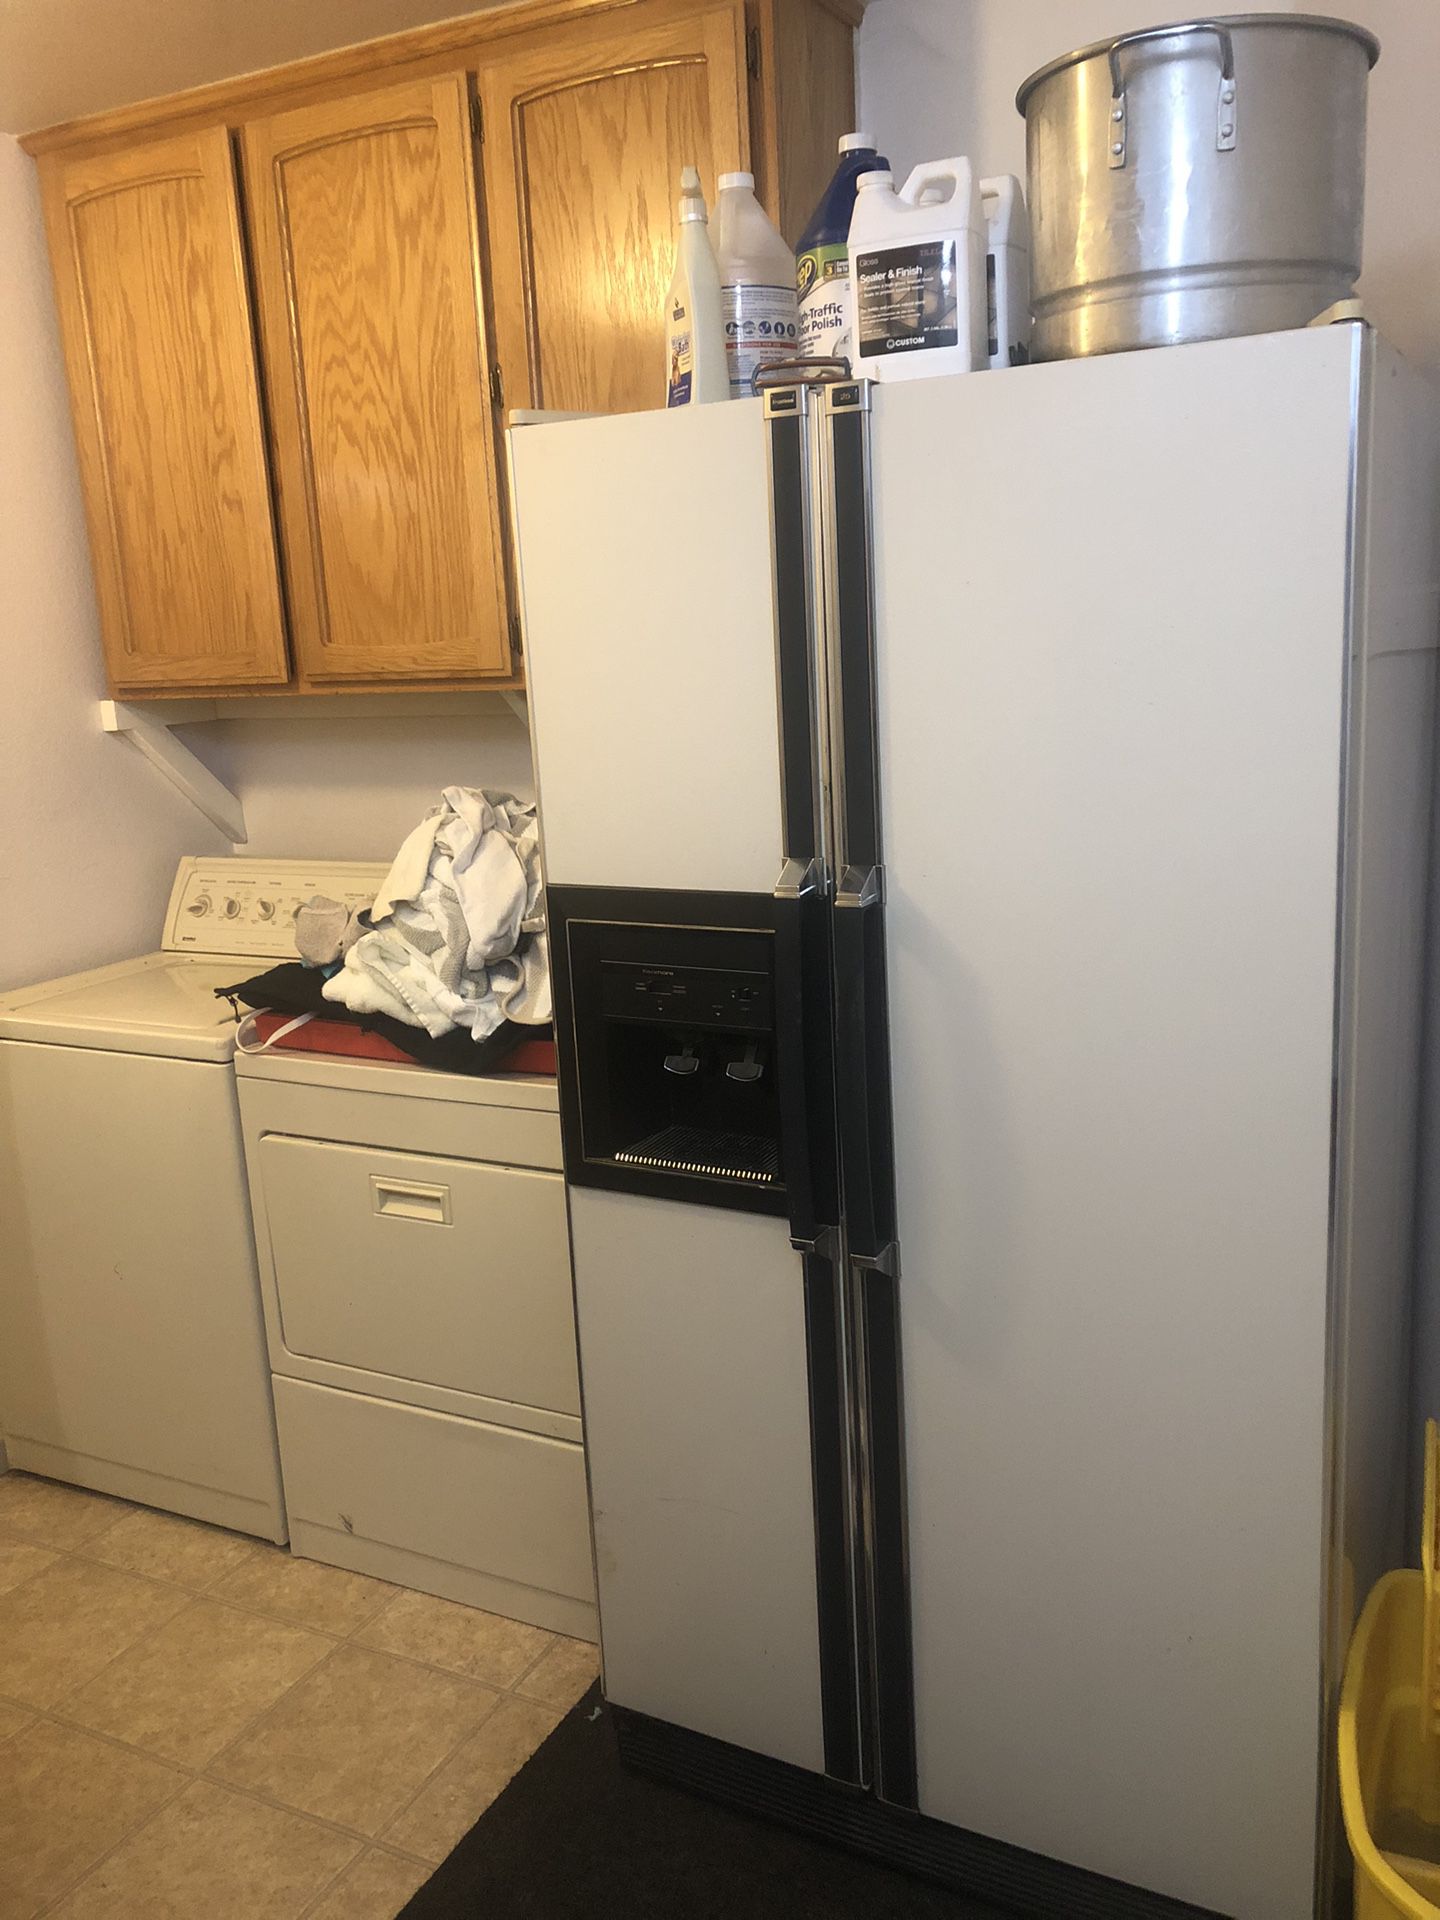 Washer and dryer plus refrigerator freezer